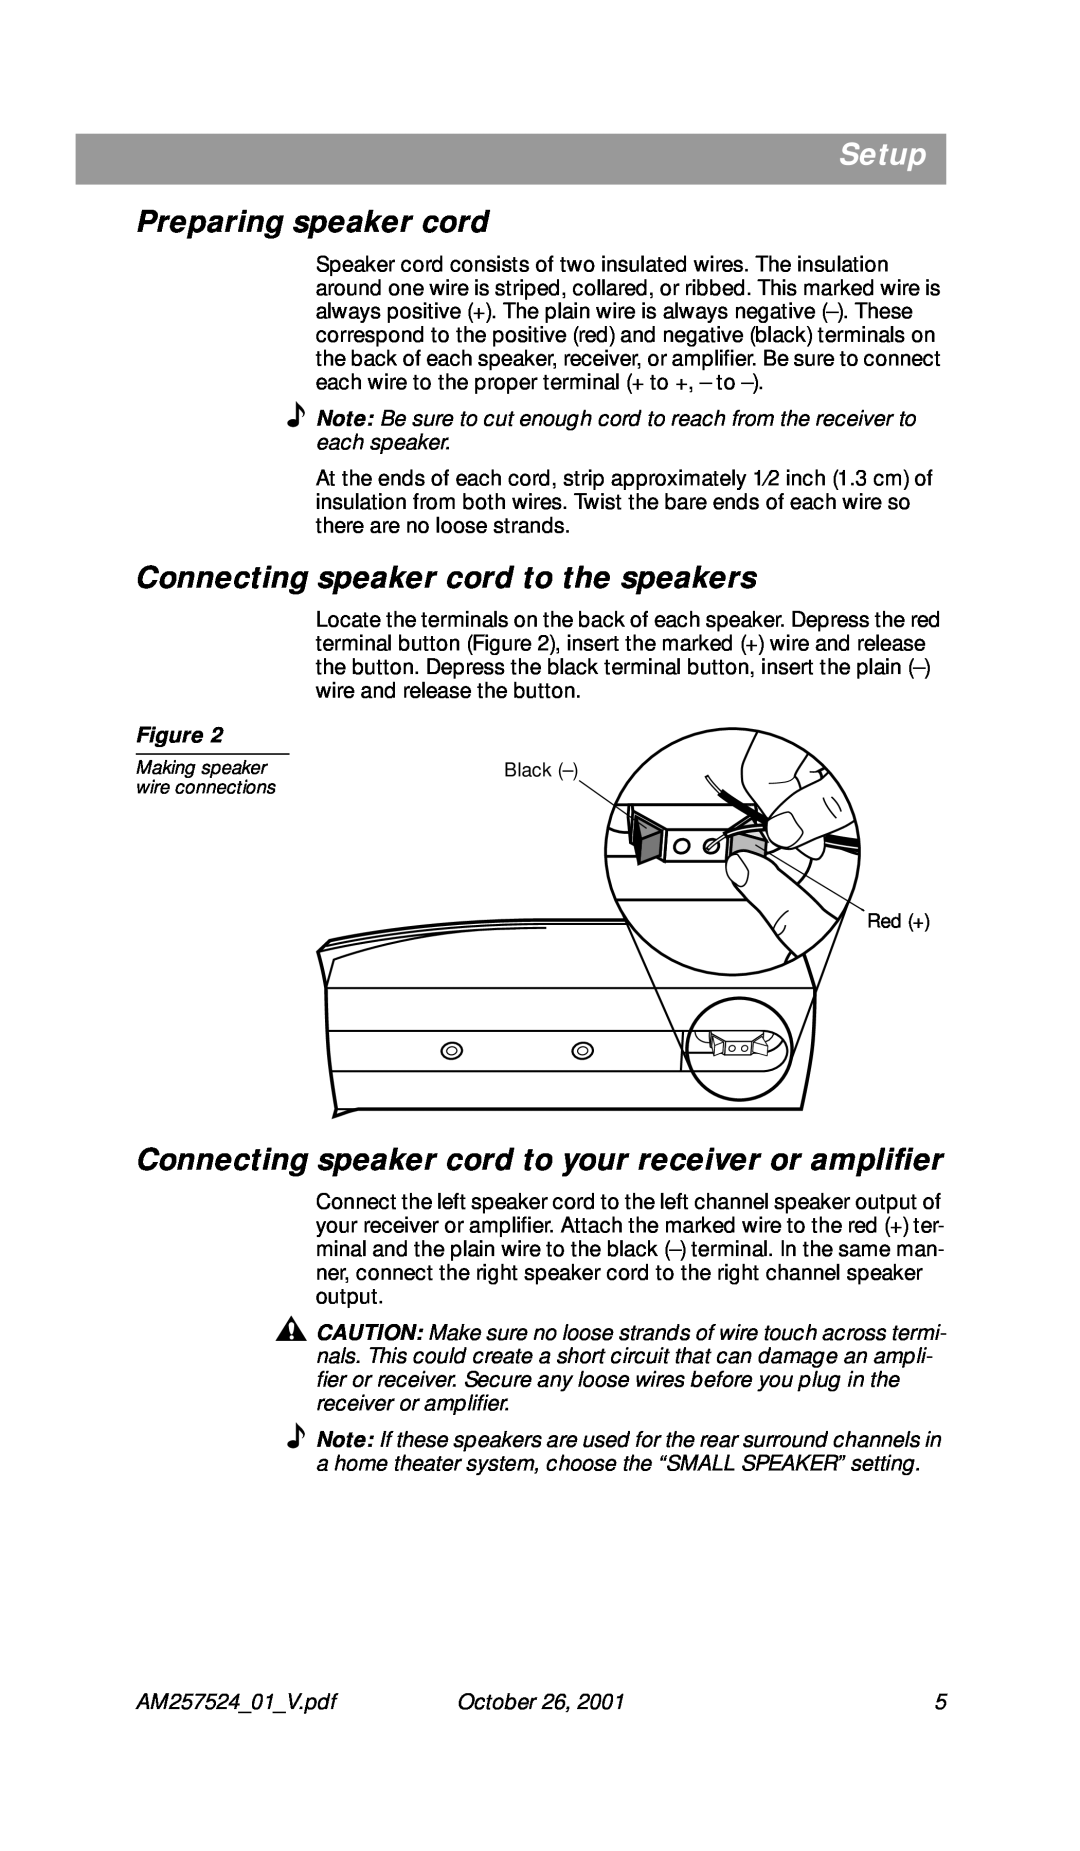 Bose Speakers manual Preparing speaker cord, Connecting speaker cord to the speakers, Setup, October 